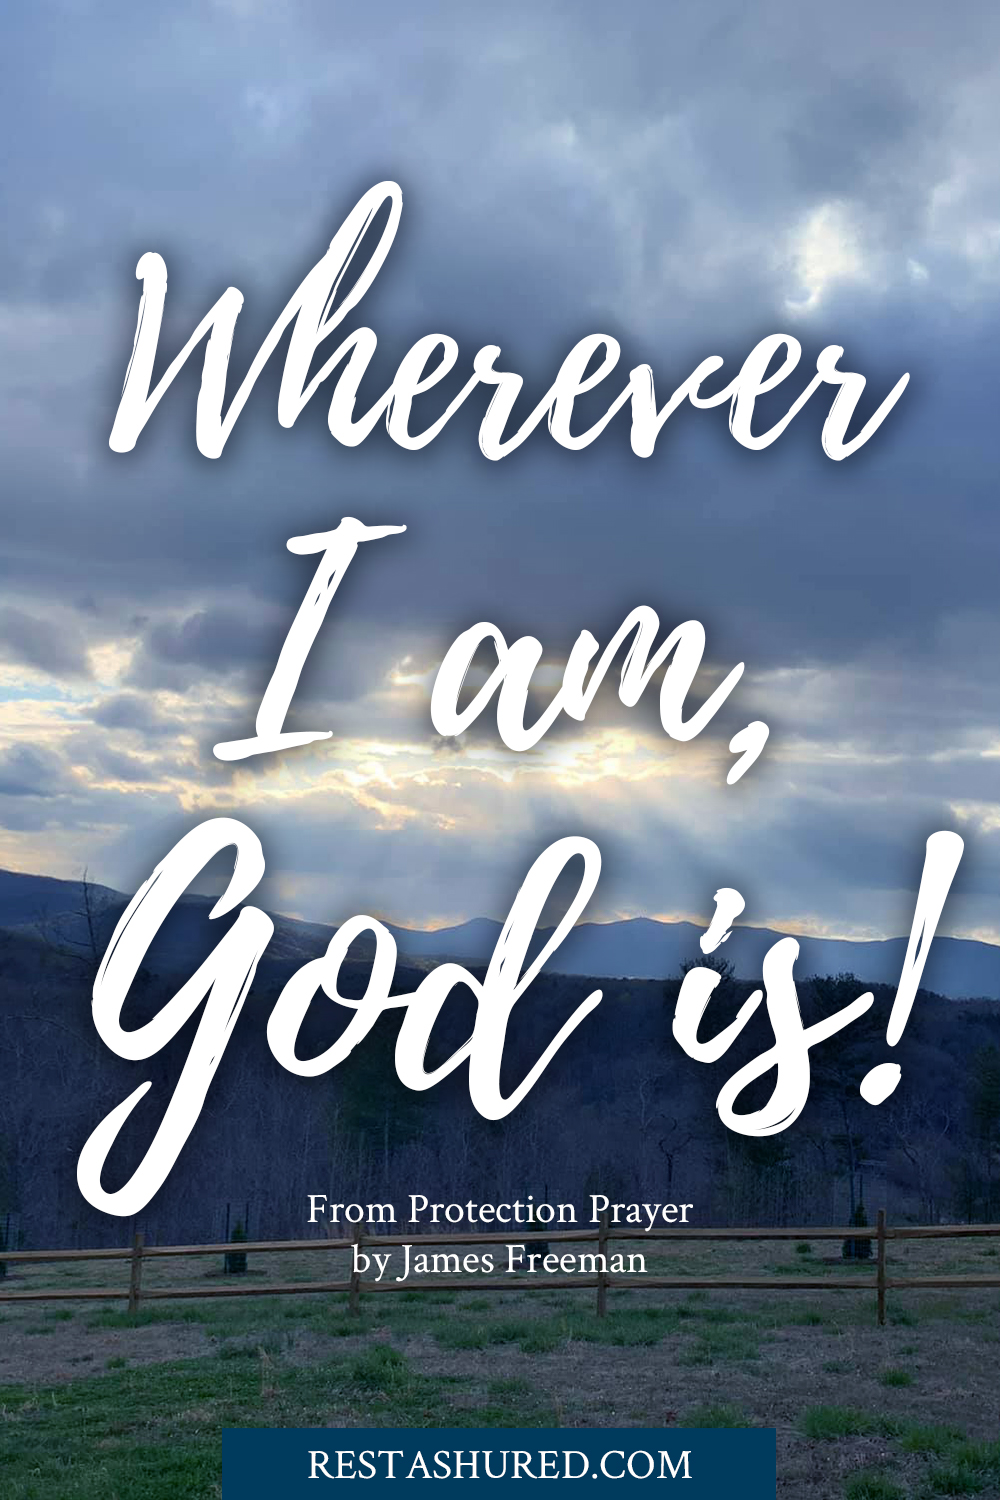 Protection Prayer by James Freeman